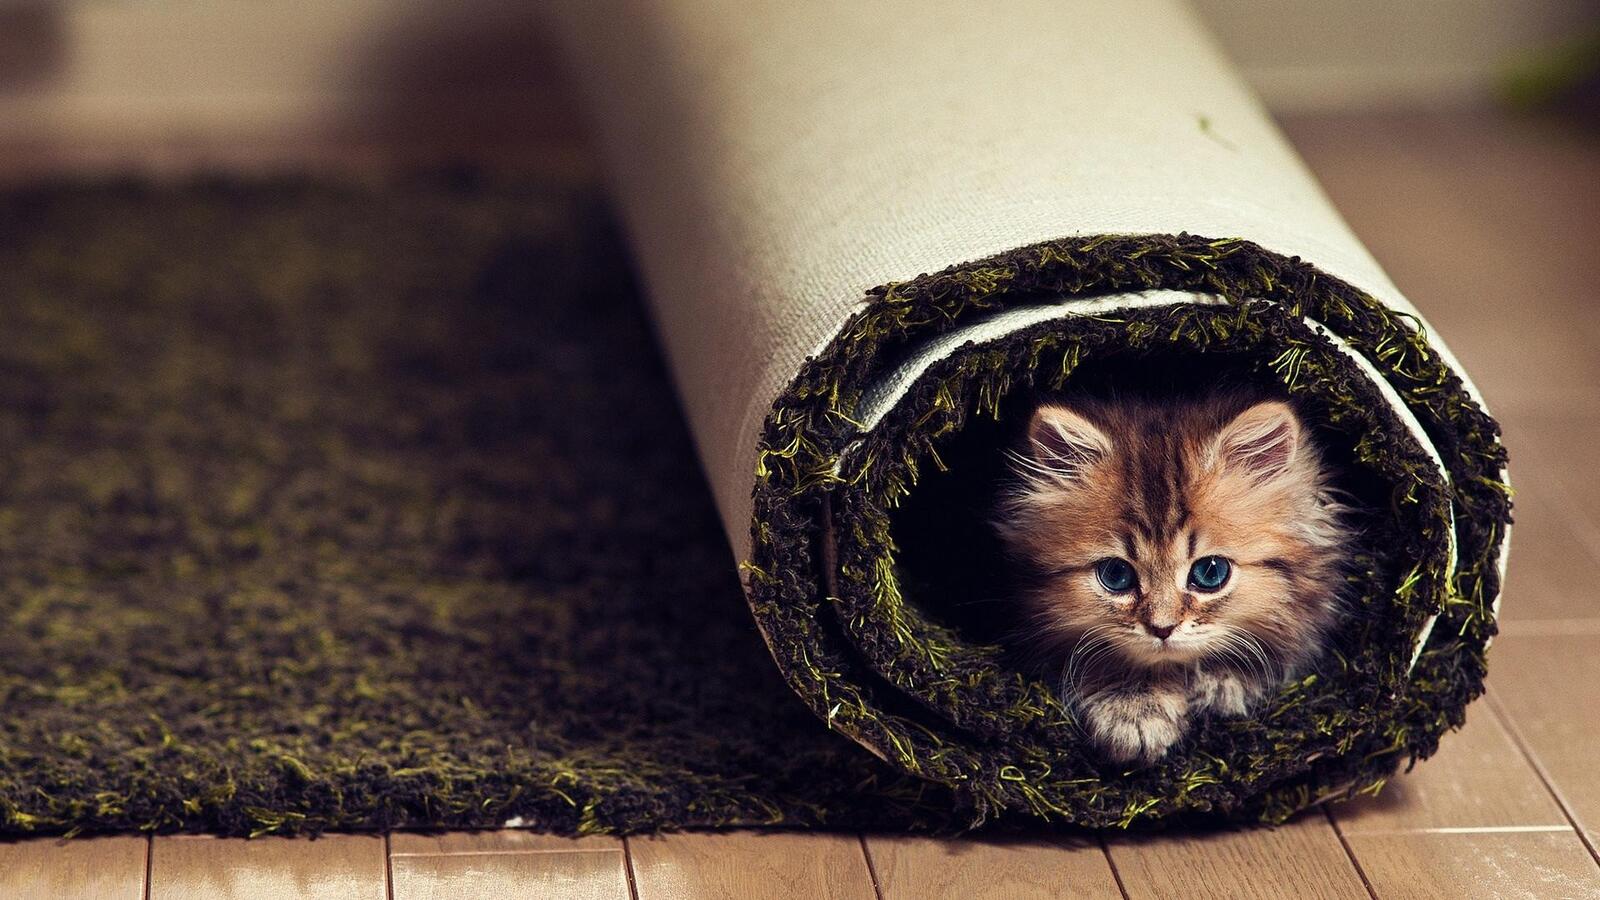 Wallpapers animals carpet cats on the desktop